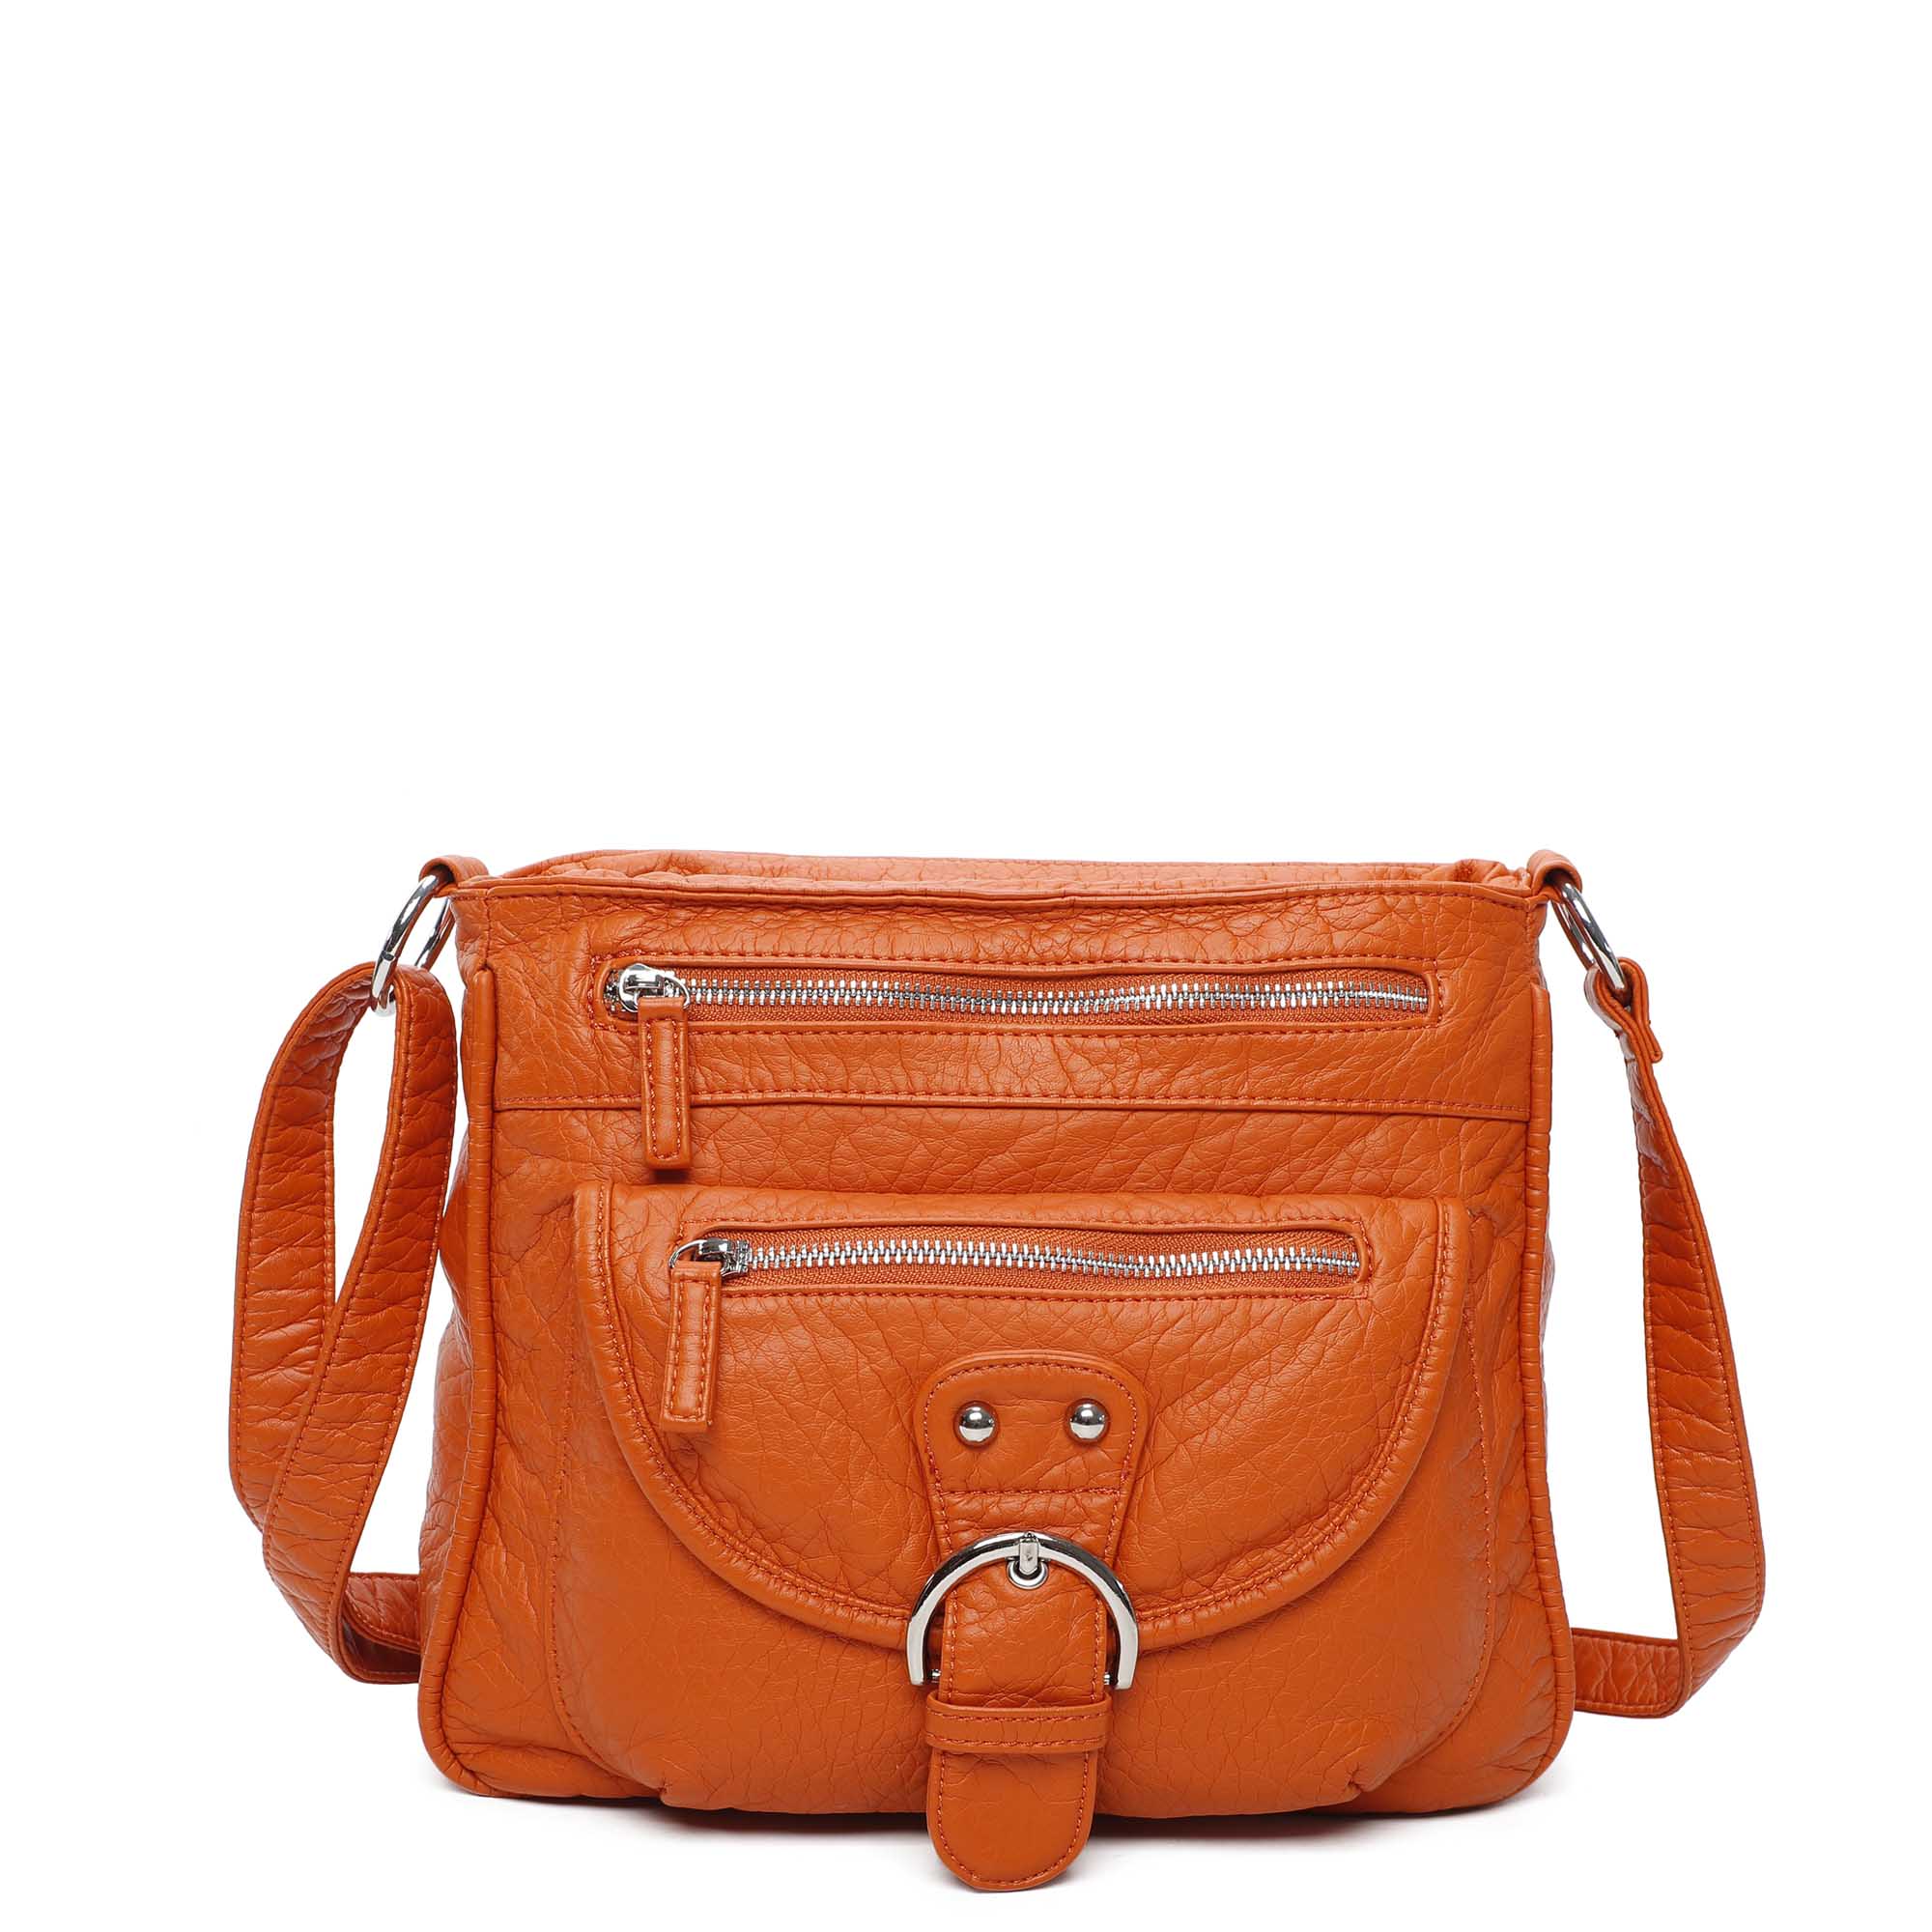 Brahmin Marley Dusty Orange Small Melbourne Leather Bag Crossbody Purse New  | eBay